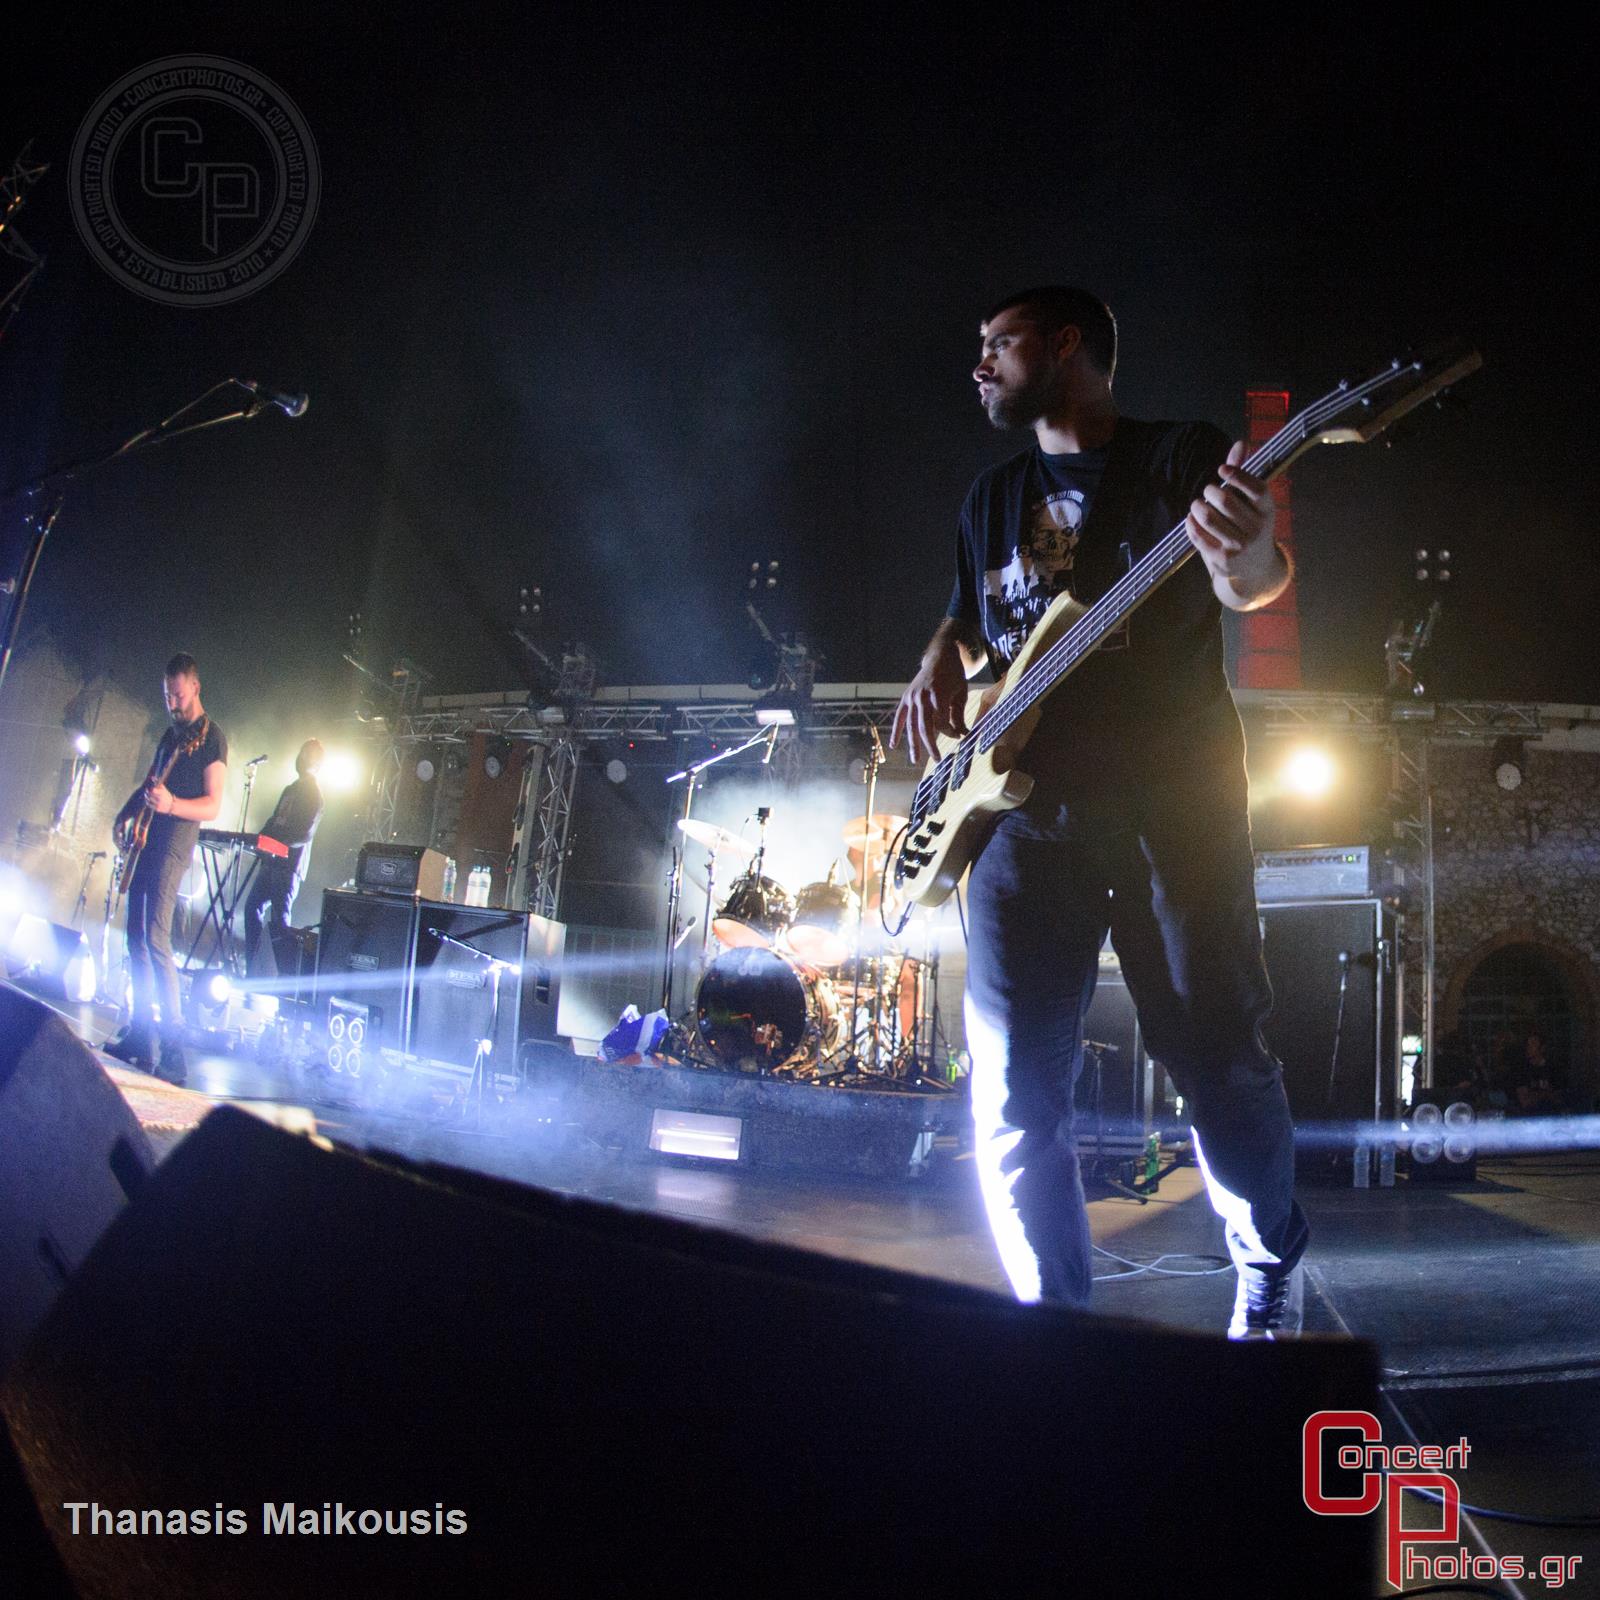 VIC-VIC-Technopolis photographer: Thanasis Maikousis - concertphotos_20150925_20_56_26